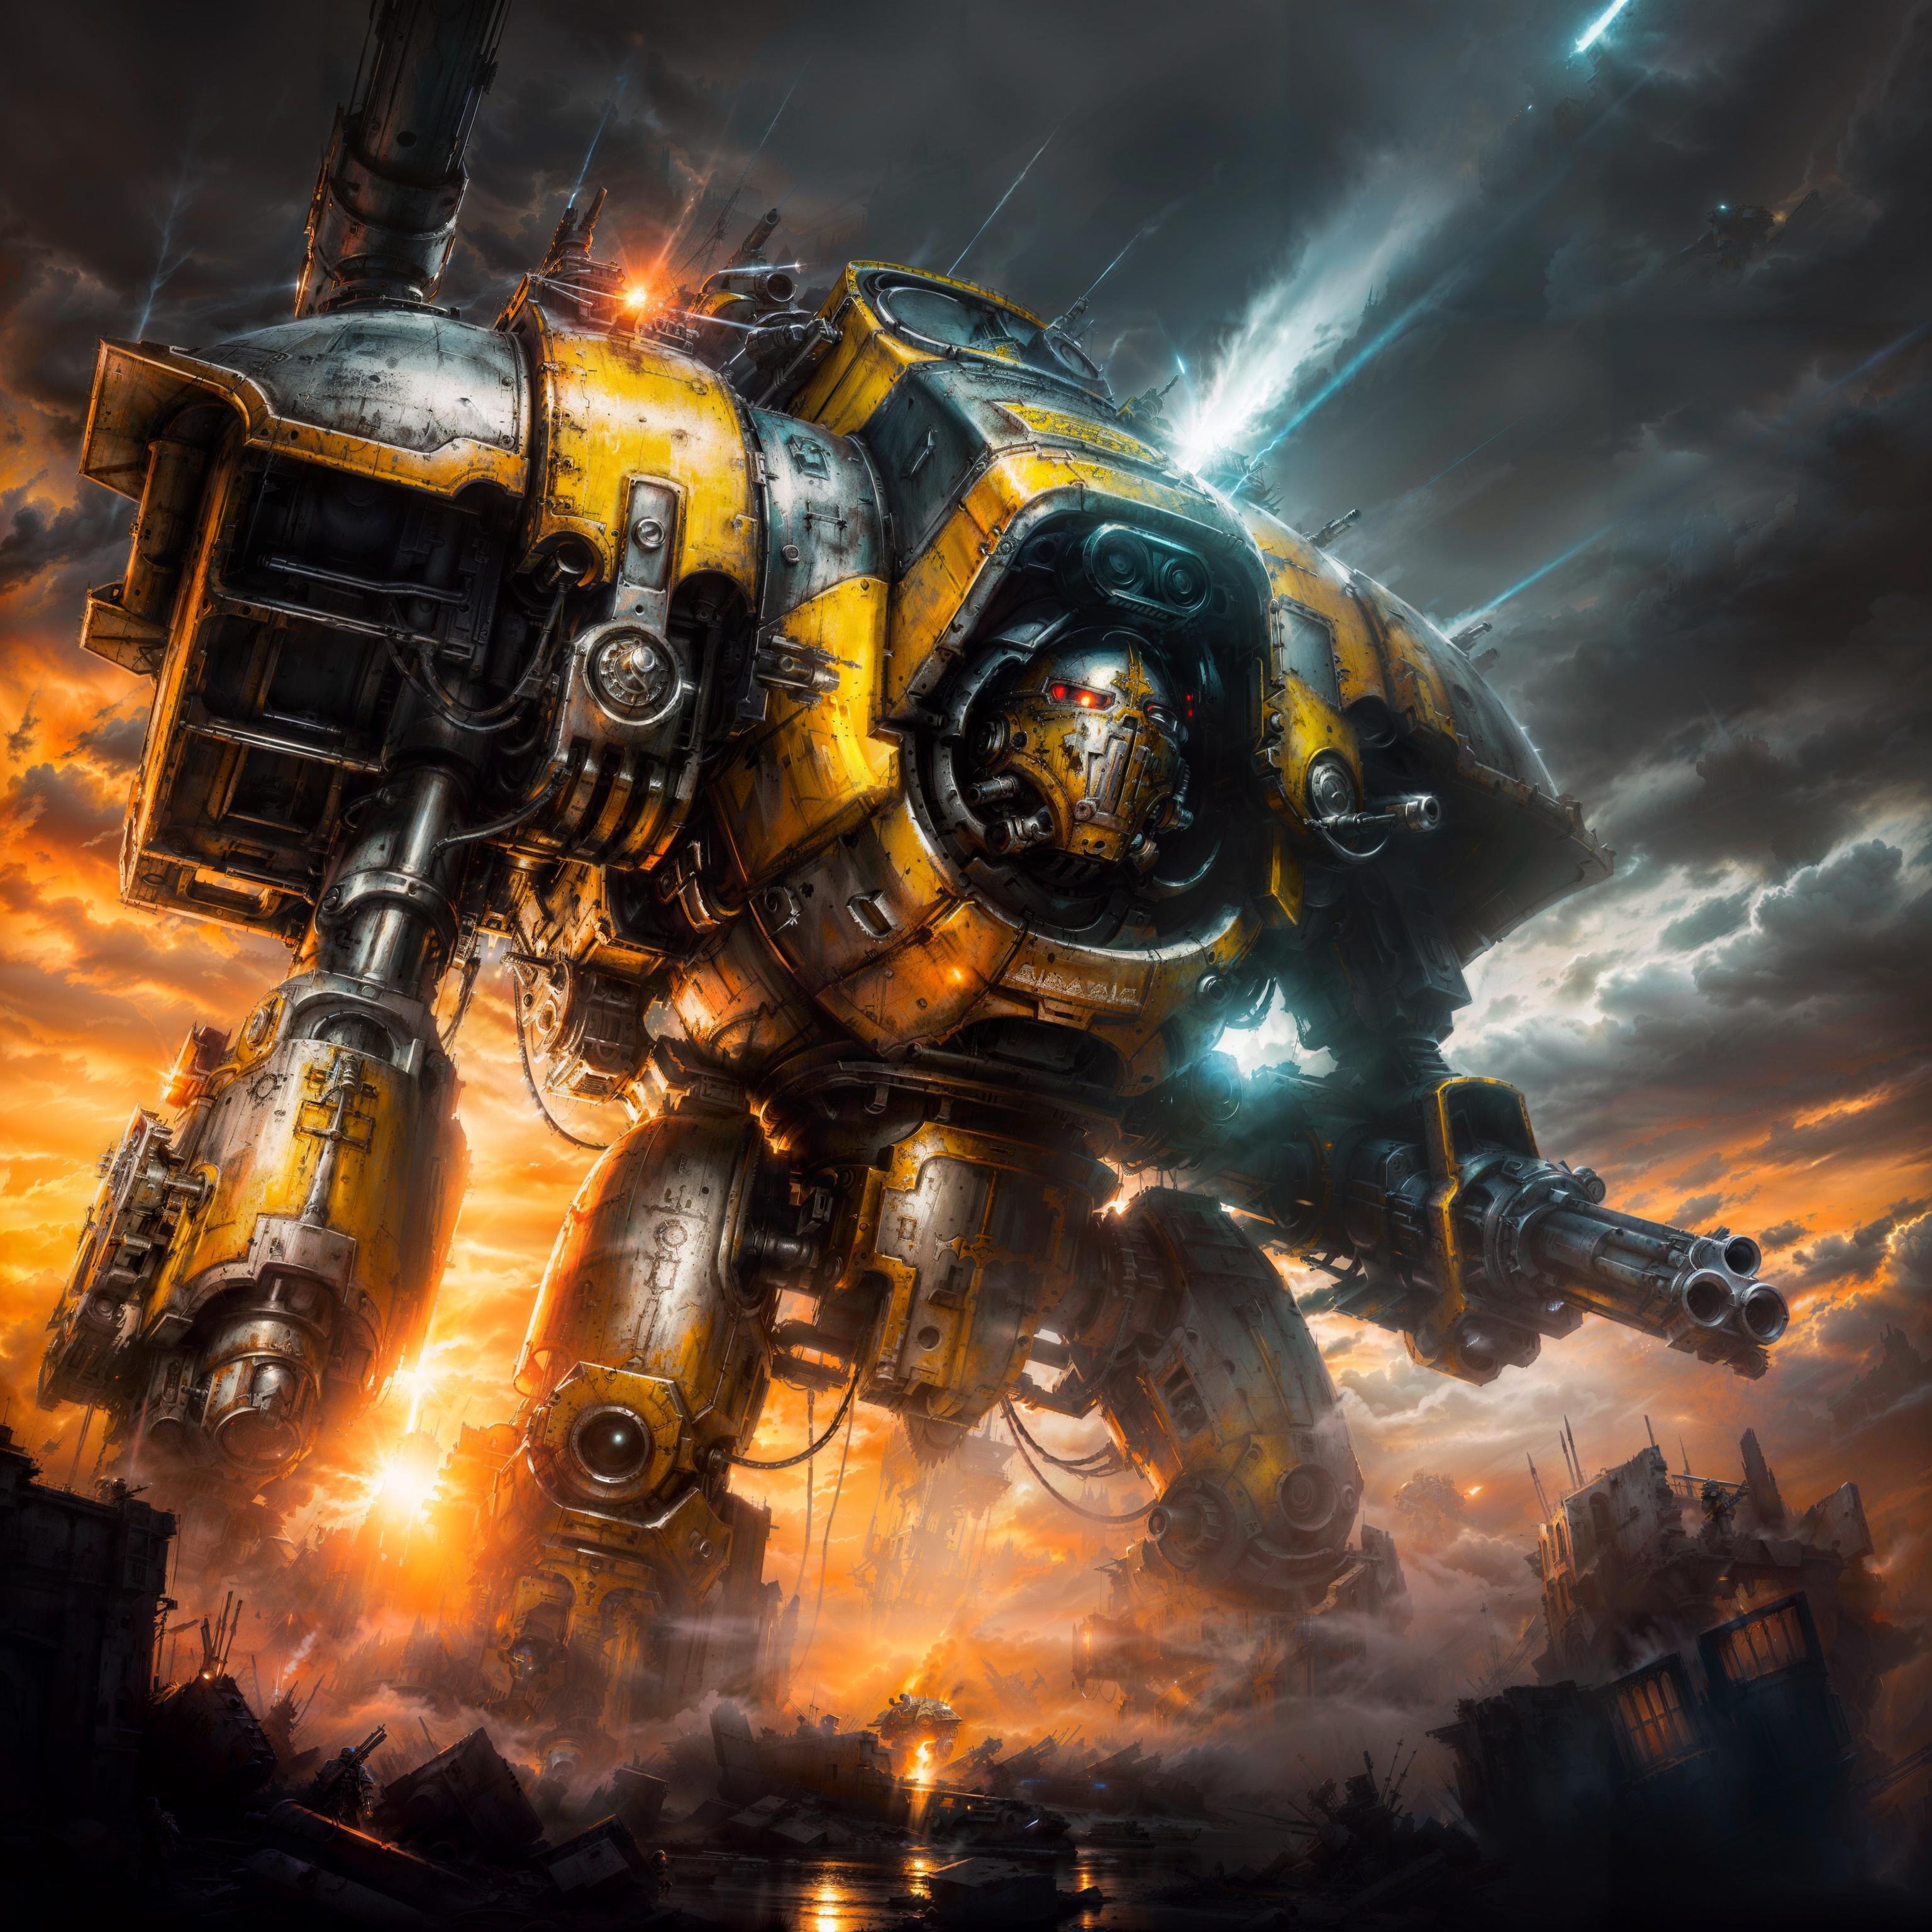 Titan, God-Machine image by Geekyzilla